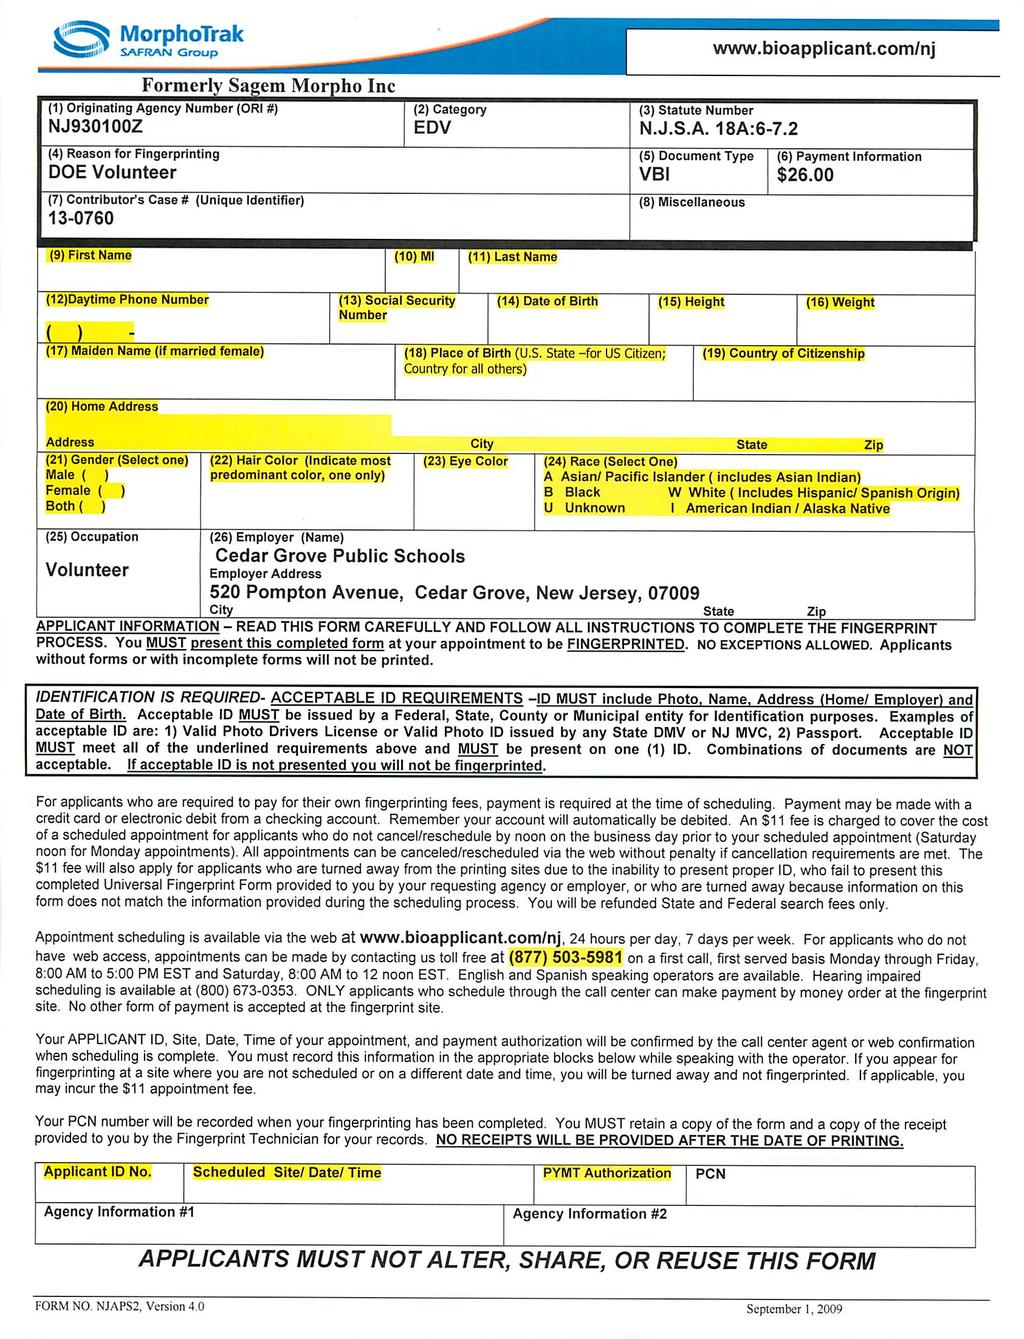 MorphoTrak SAFRAM Group Formerly Sagem Morpho Inc (1) Originating Agency Number (ORI #) NJ930100Z (4) Reason for Fingerprinting DOE Volunteer (7) Contributor's Case # (Unique Identifier) 13-0760 (2)